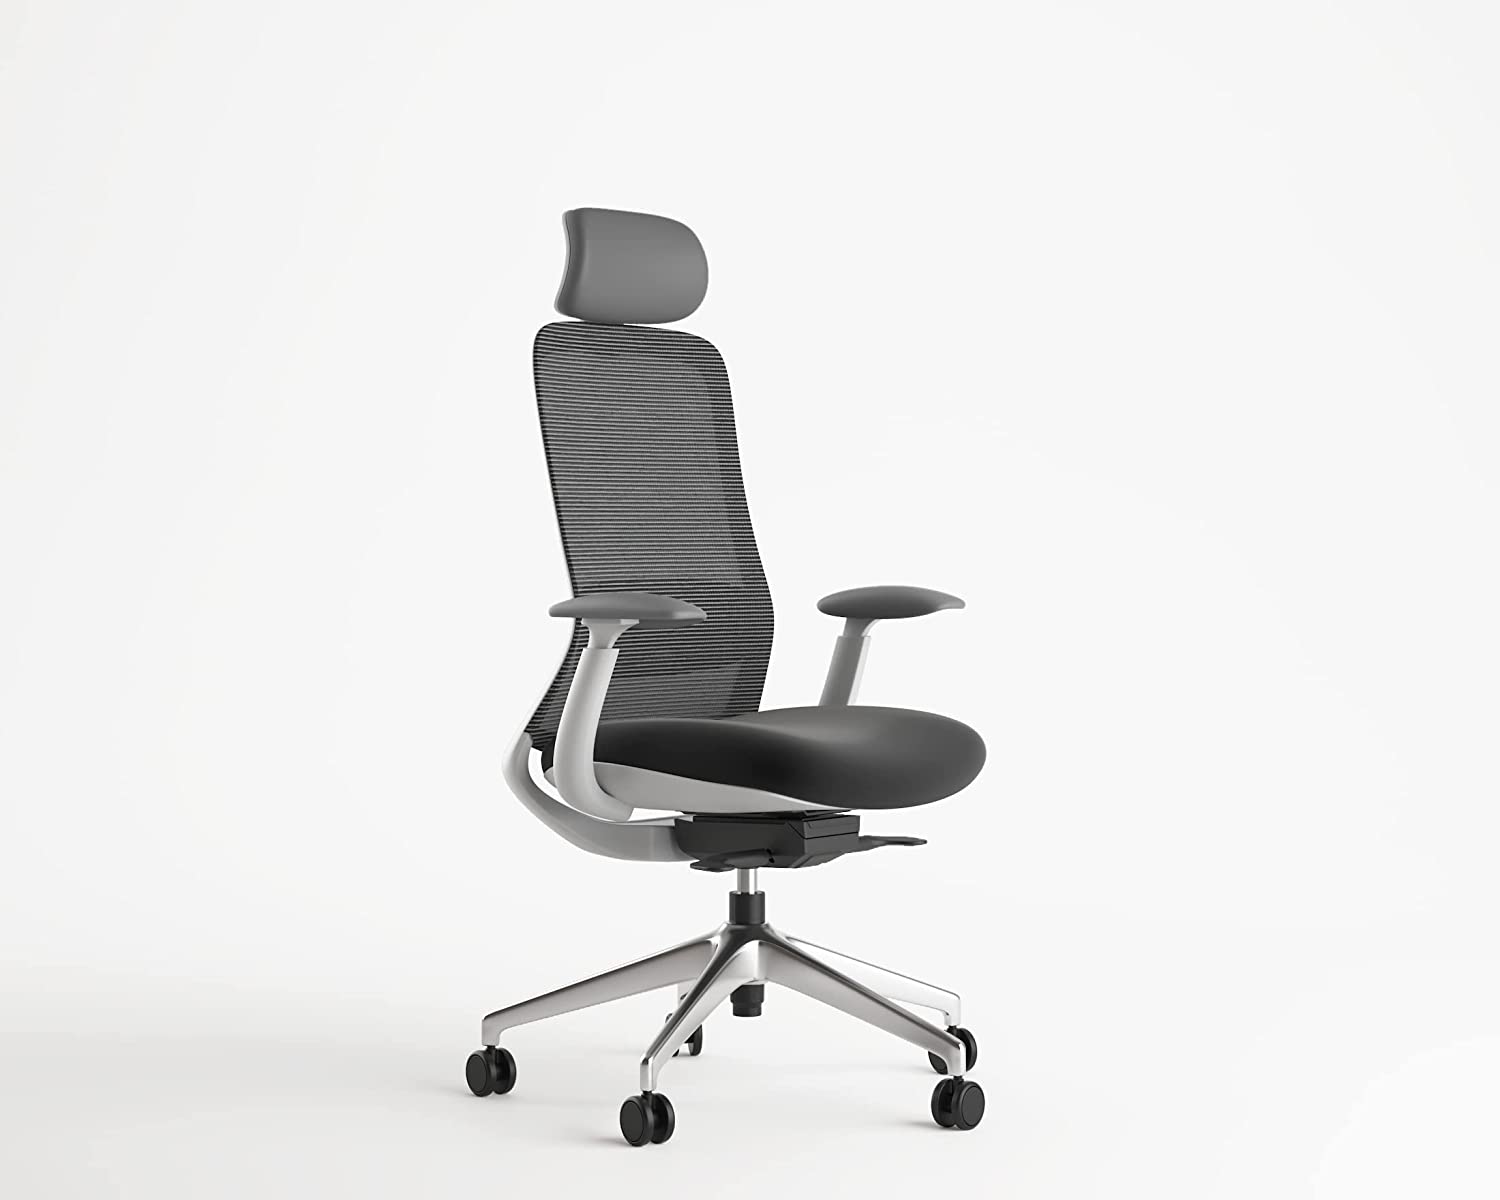 Ergonomic Chair NIO, Ergonomic Design, Premium Office & Computer Chair with adjustable features by Navodesk (Black & White)